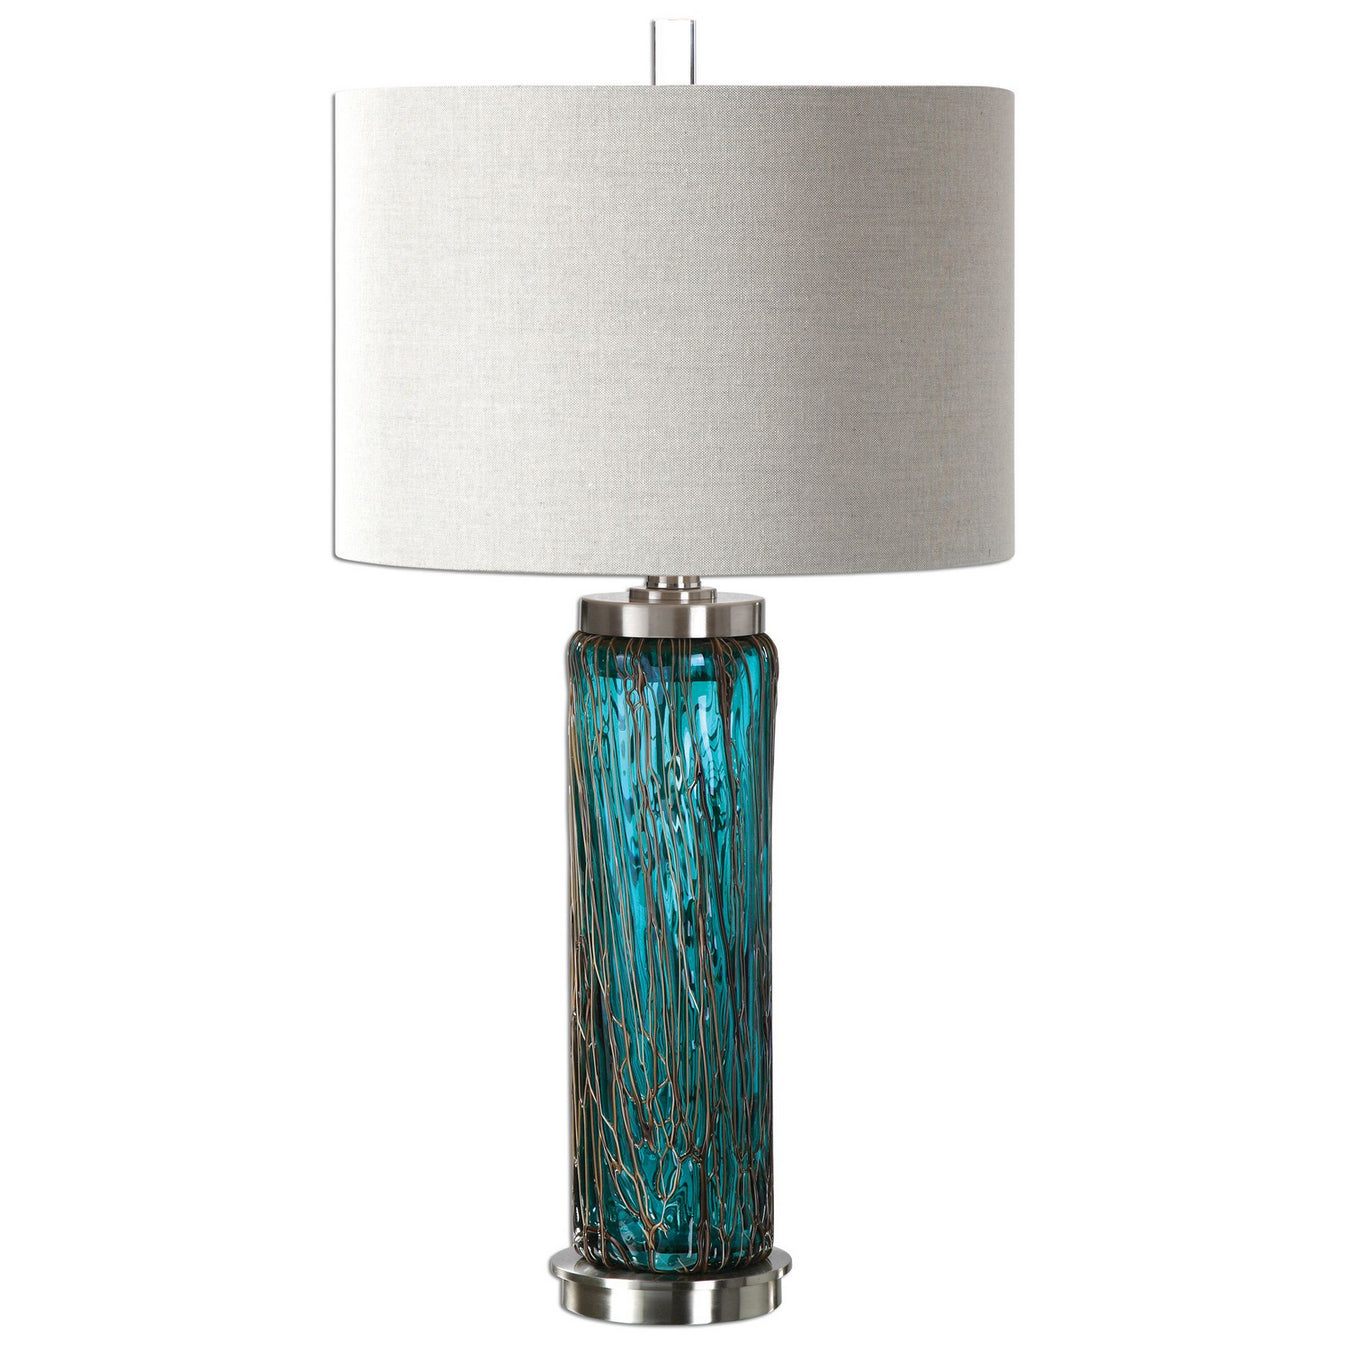 Uttermost's Almanzora Blue Glass Lamp Designed by David Frisch